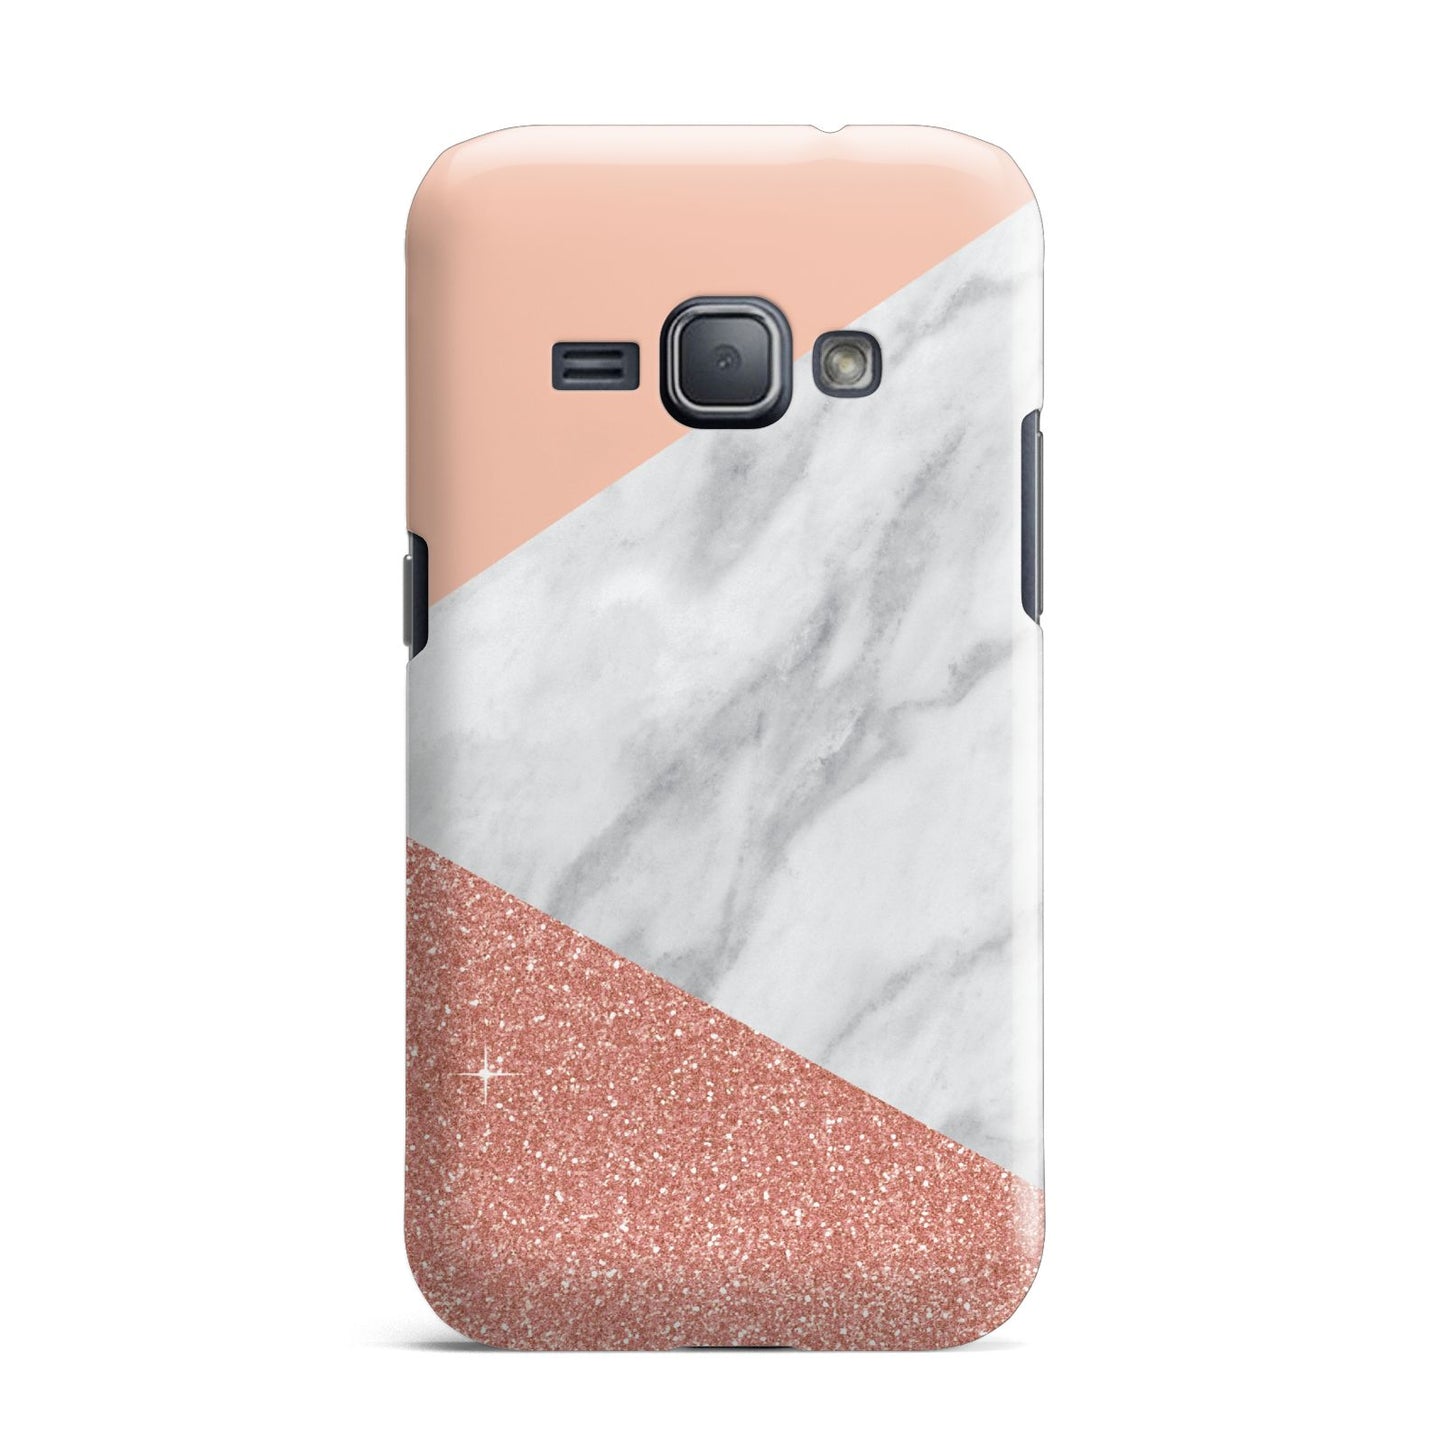 Marble White Rose Gold Samsung Galaxy J1 2016 Case